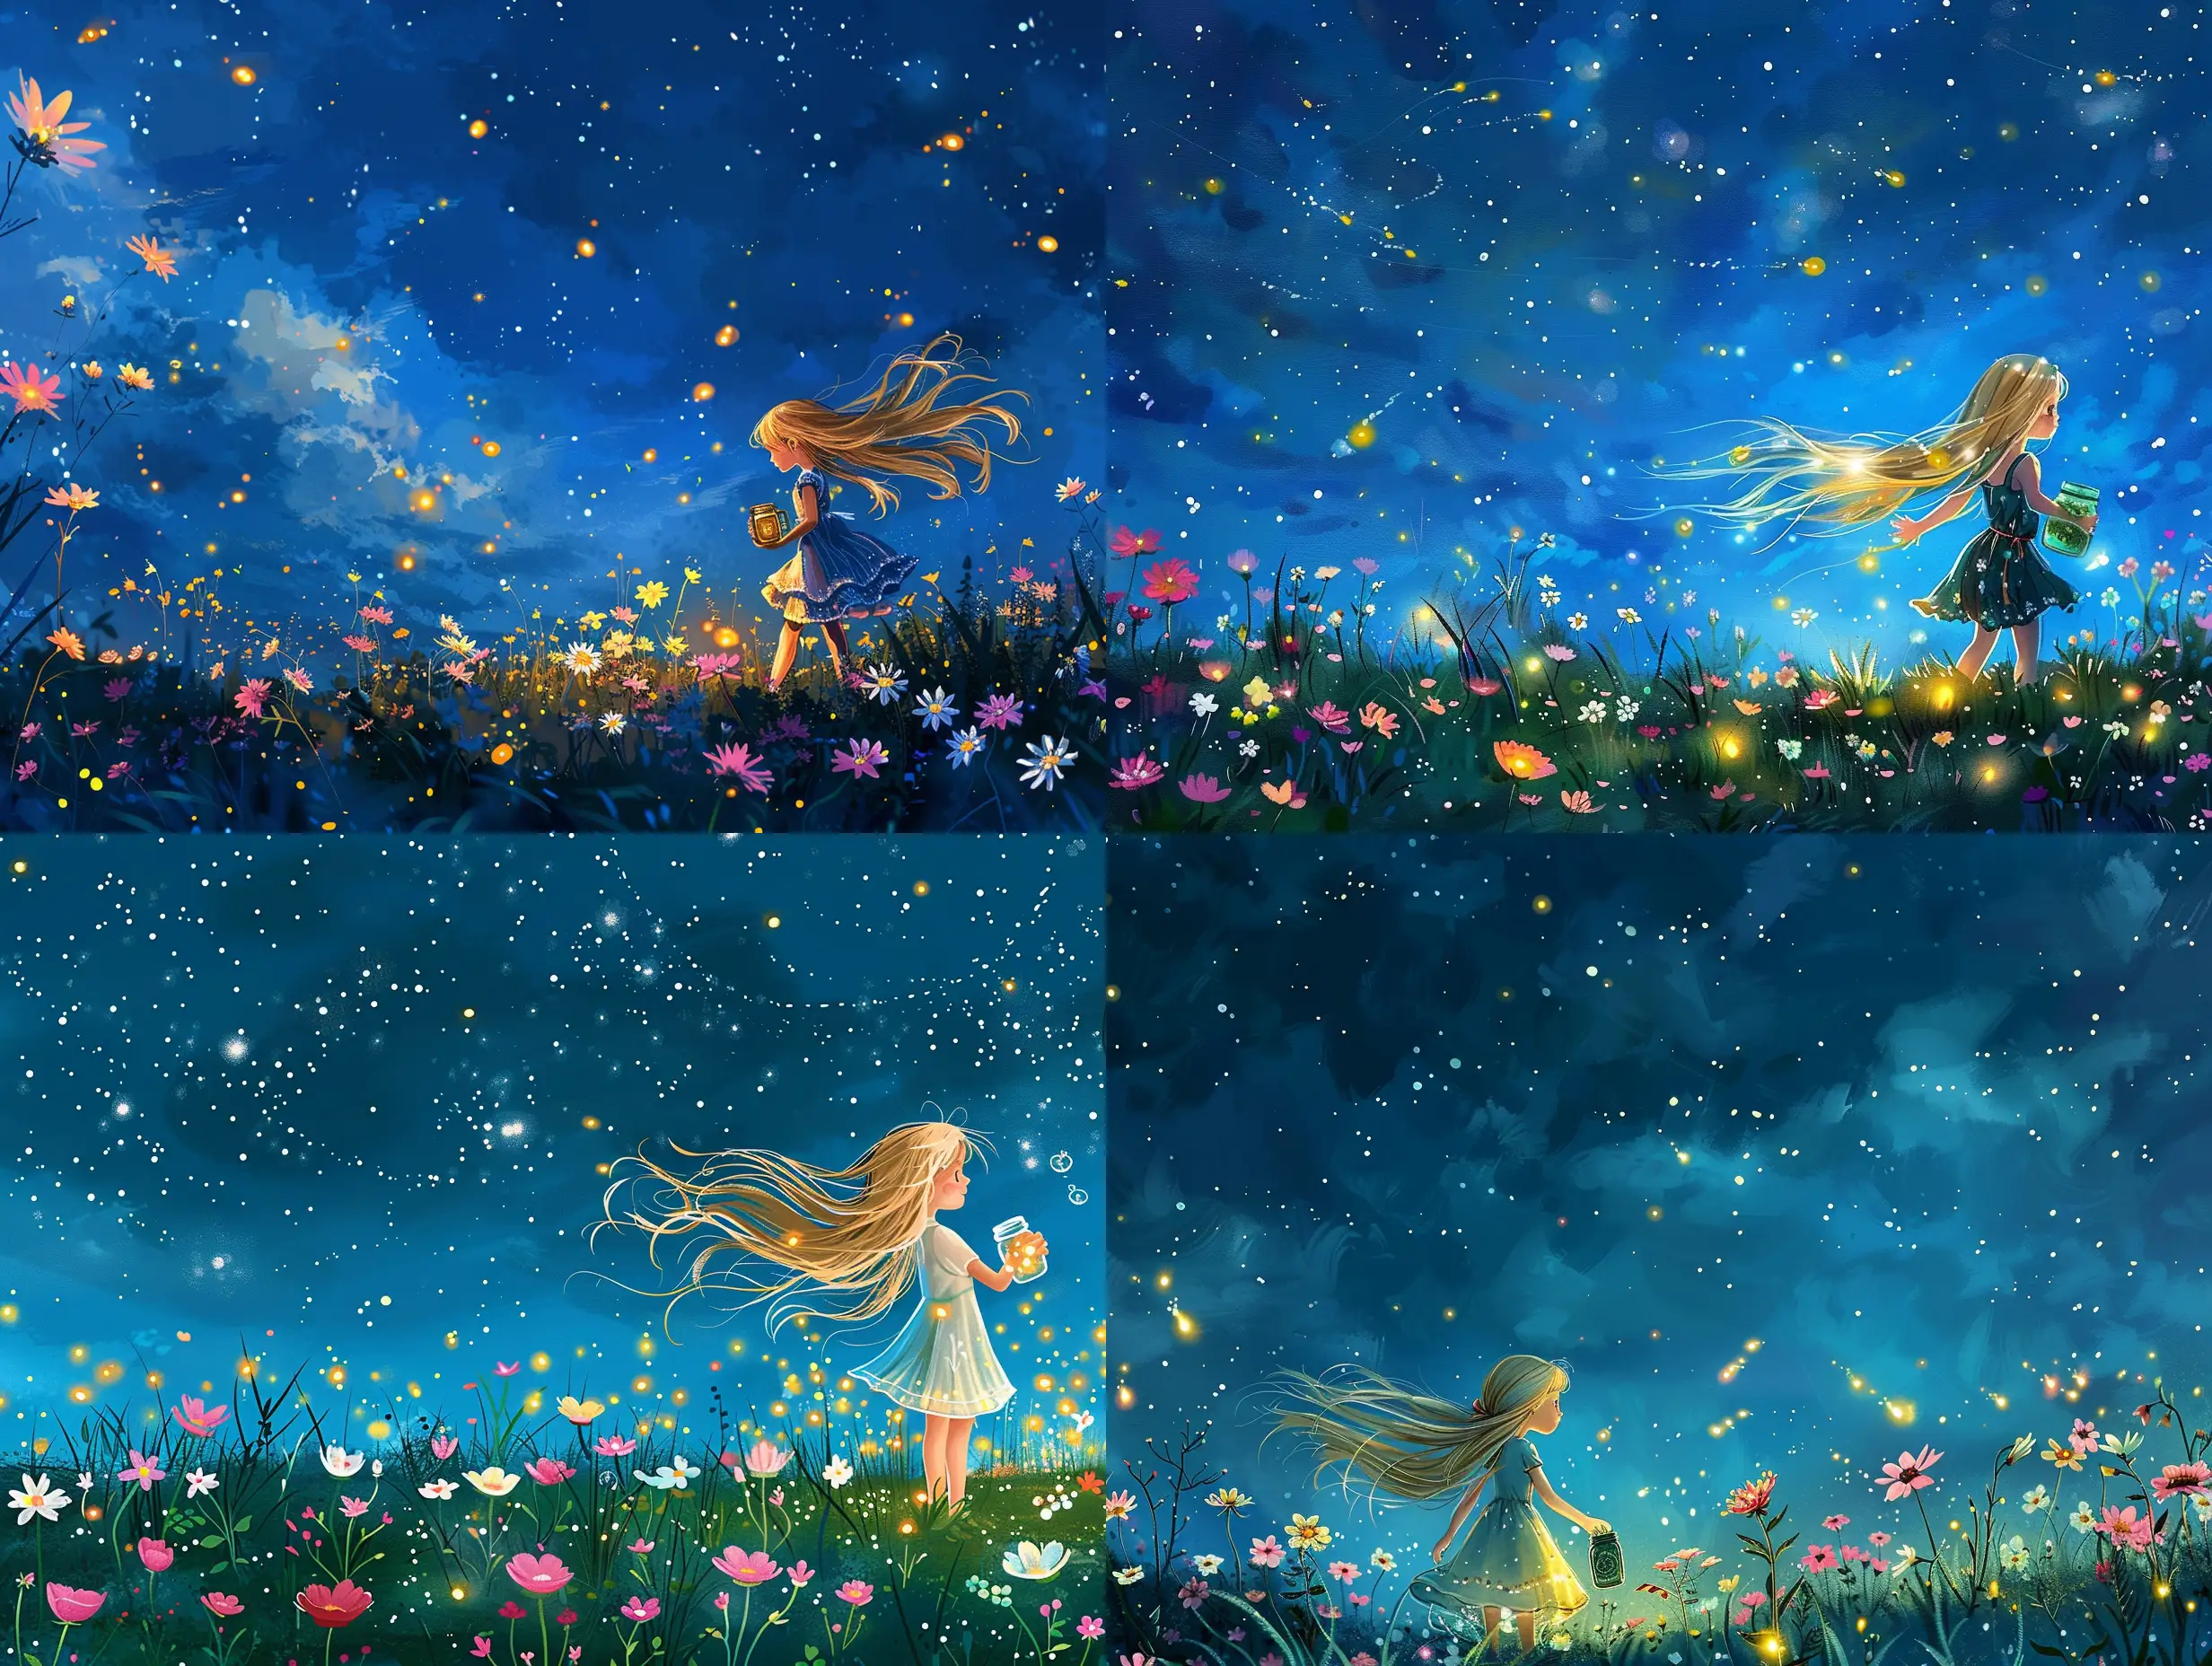 Enchanting-Night-Scene-Young-Girl-Capturing-Fireflies-in-a-Meadow